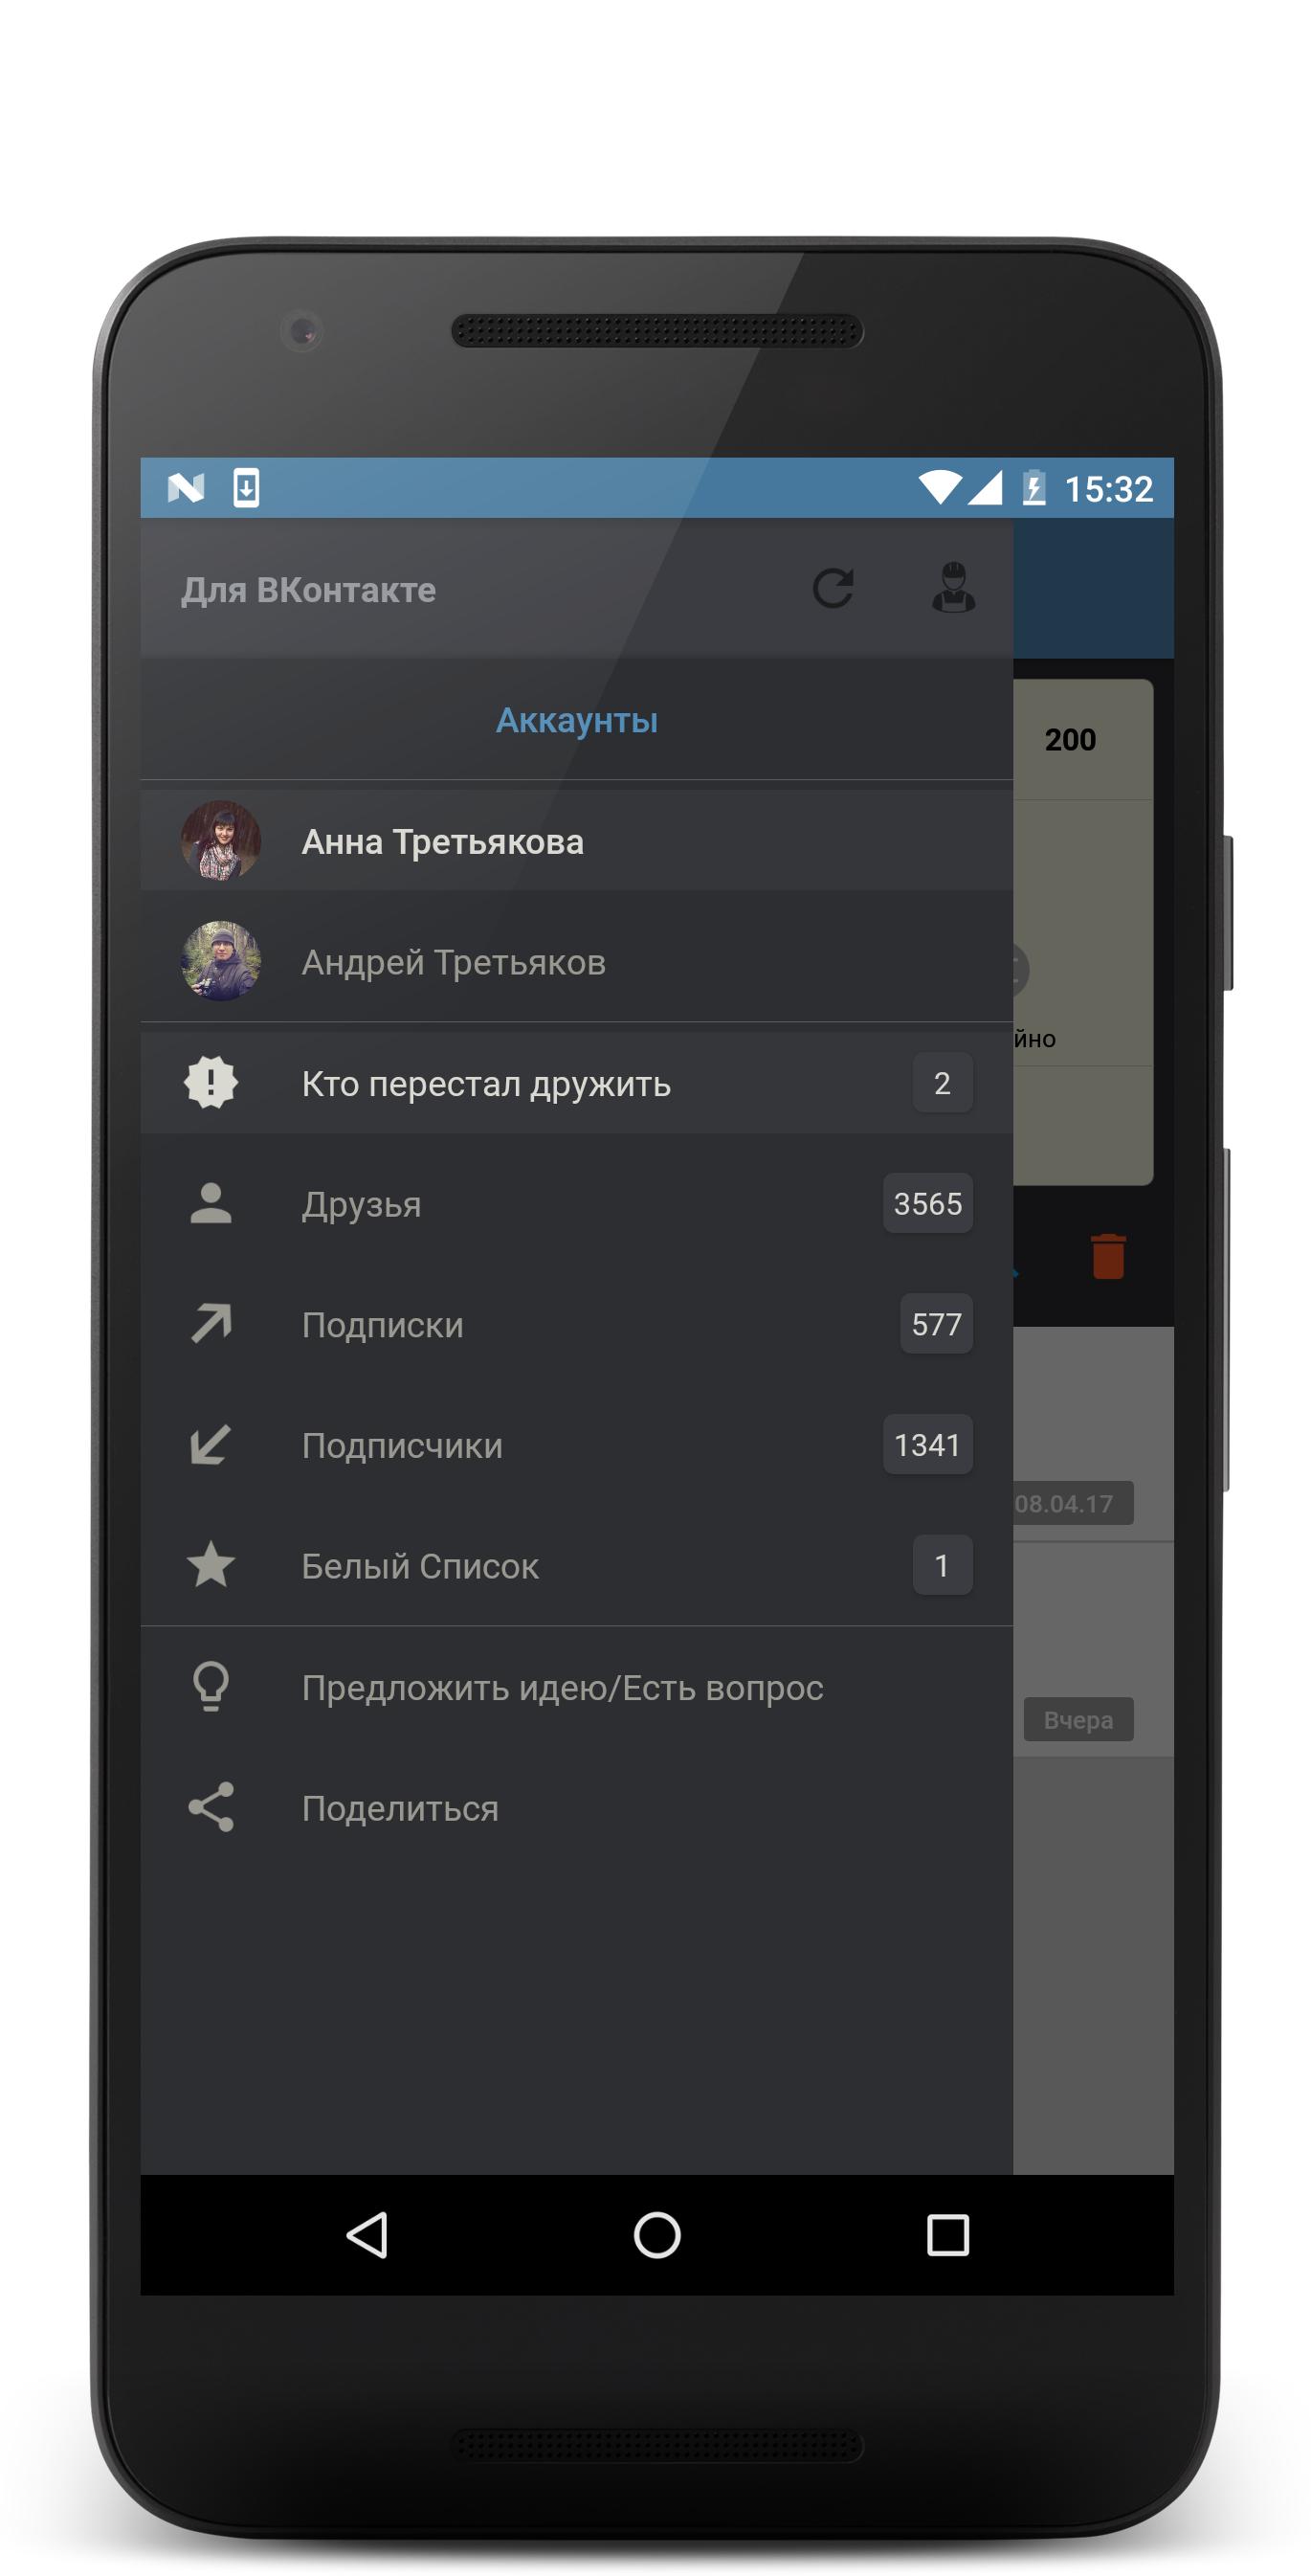 Vk apk андроид. Офлайн ВК. Google account Manager for Android 4.0.